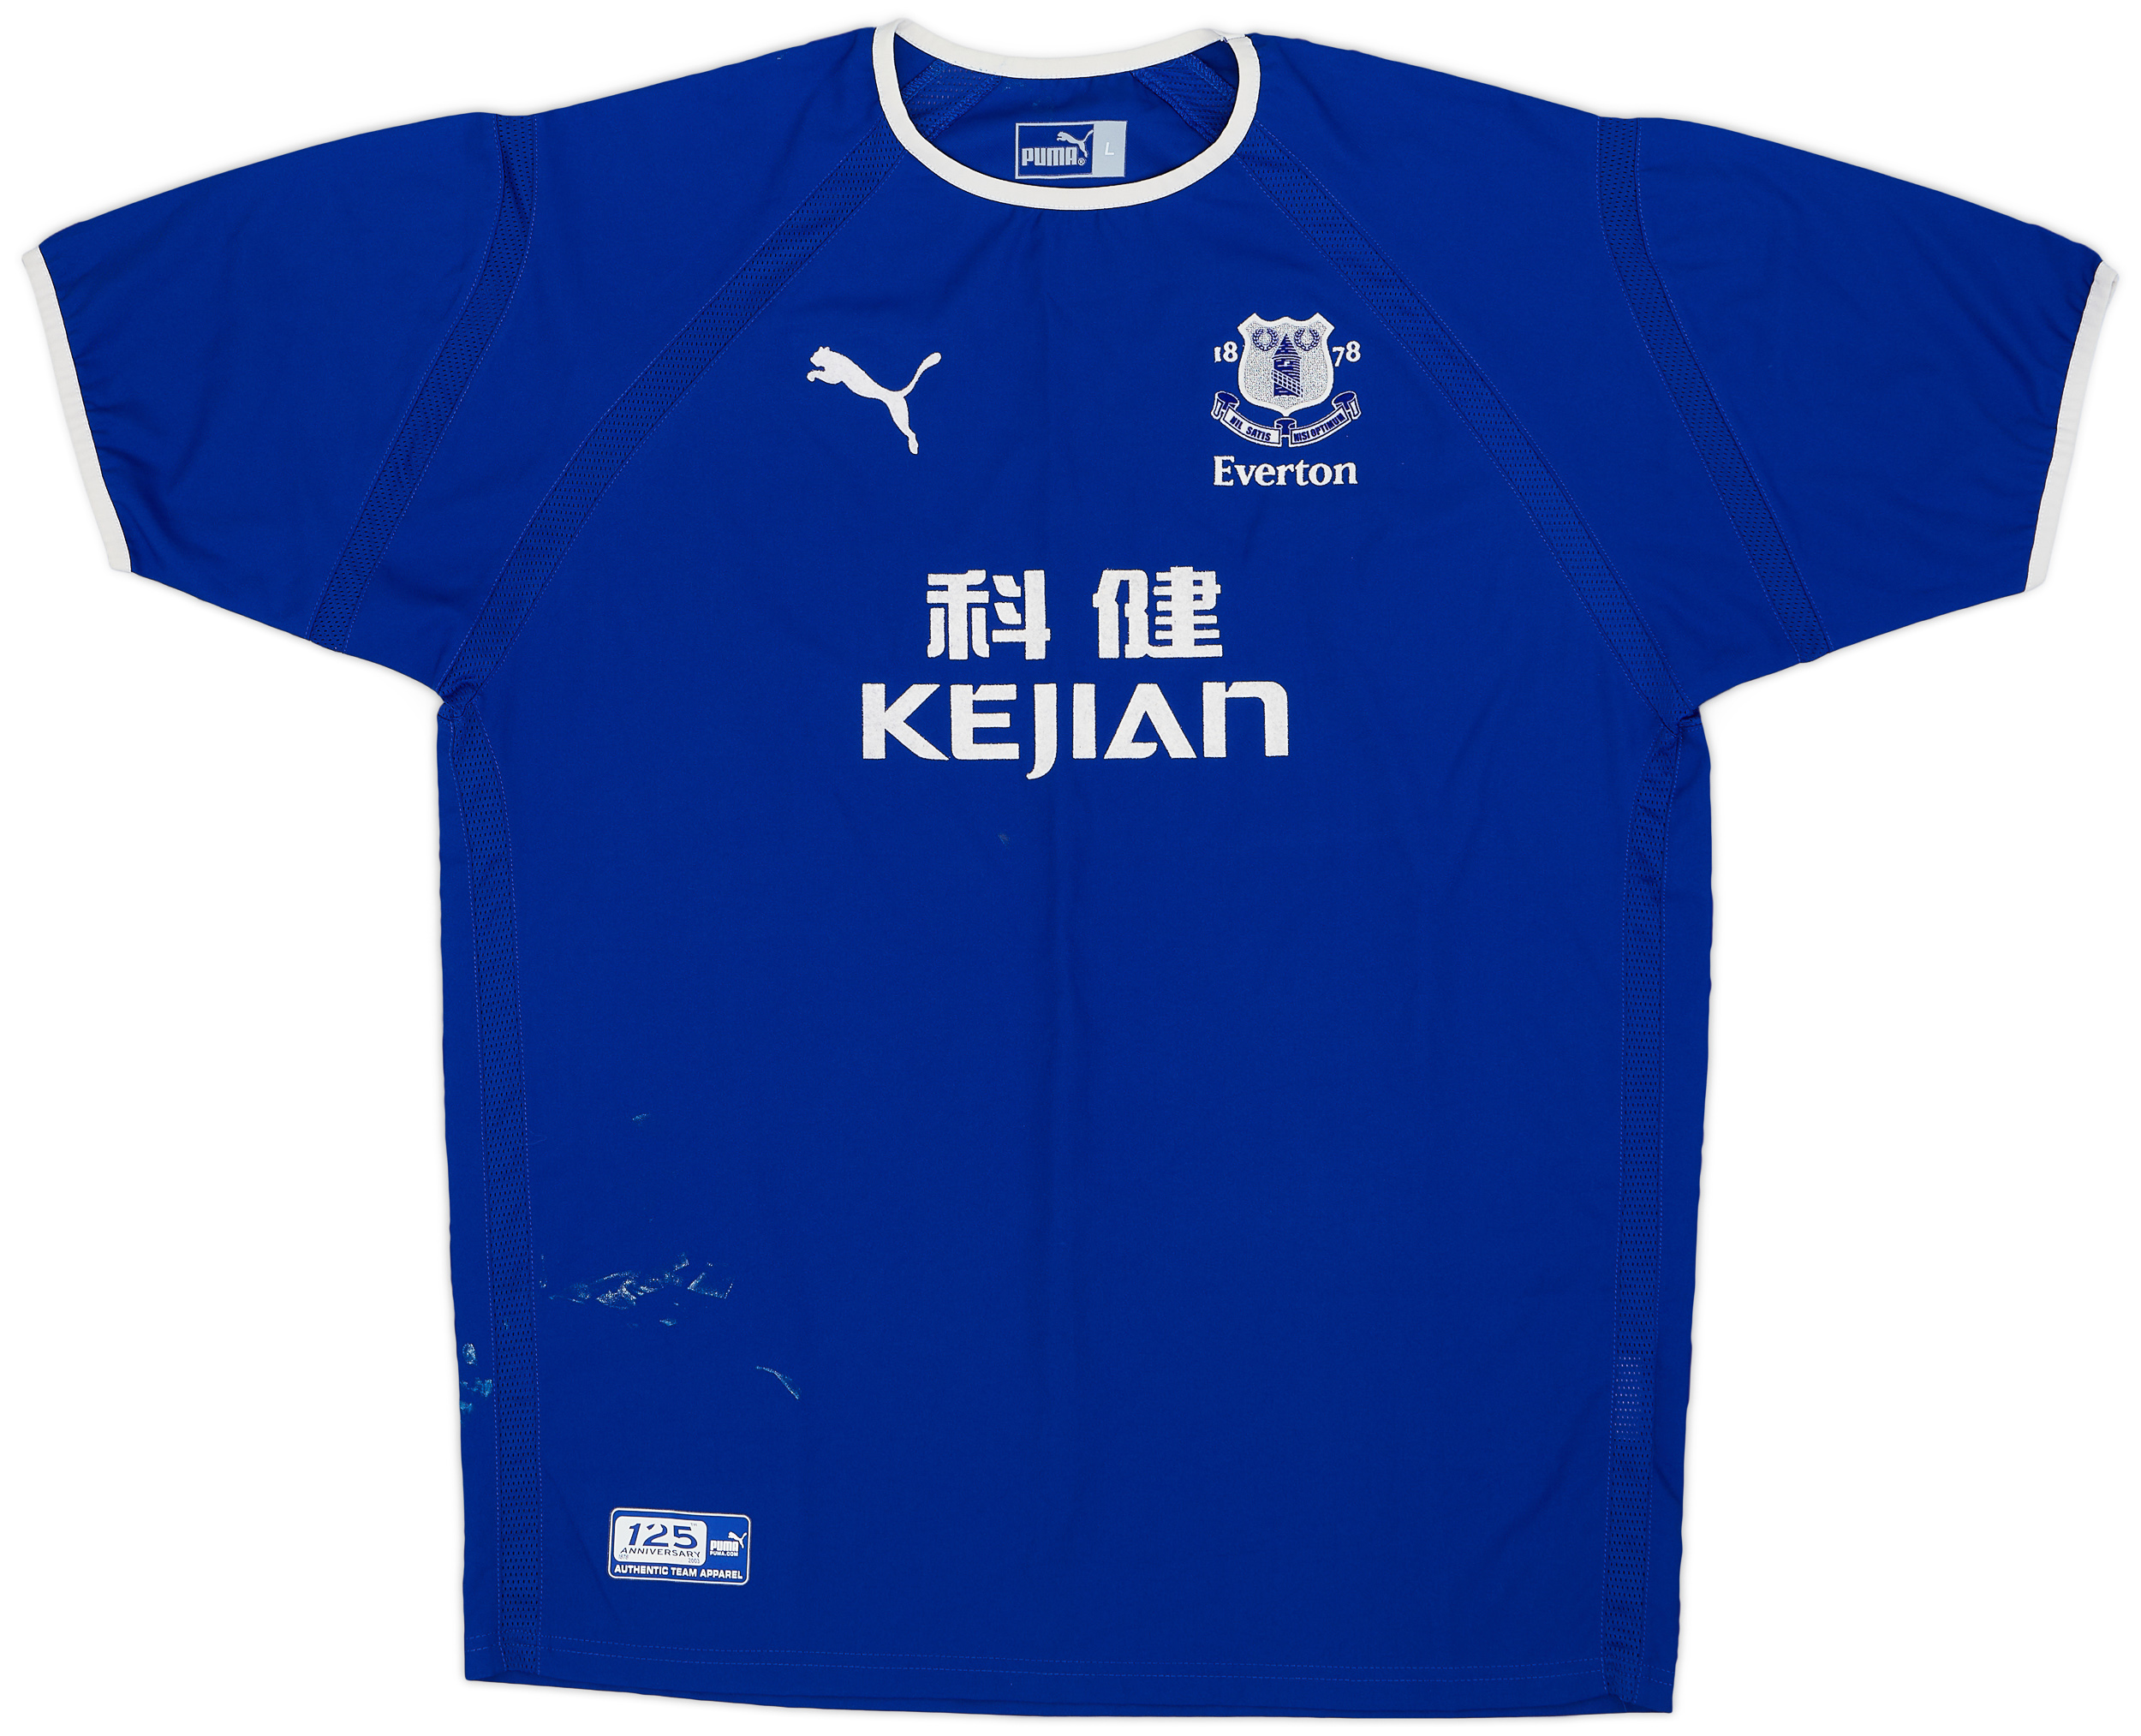 2003-04 Everton Home Shirt - 5/10 - ()